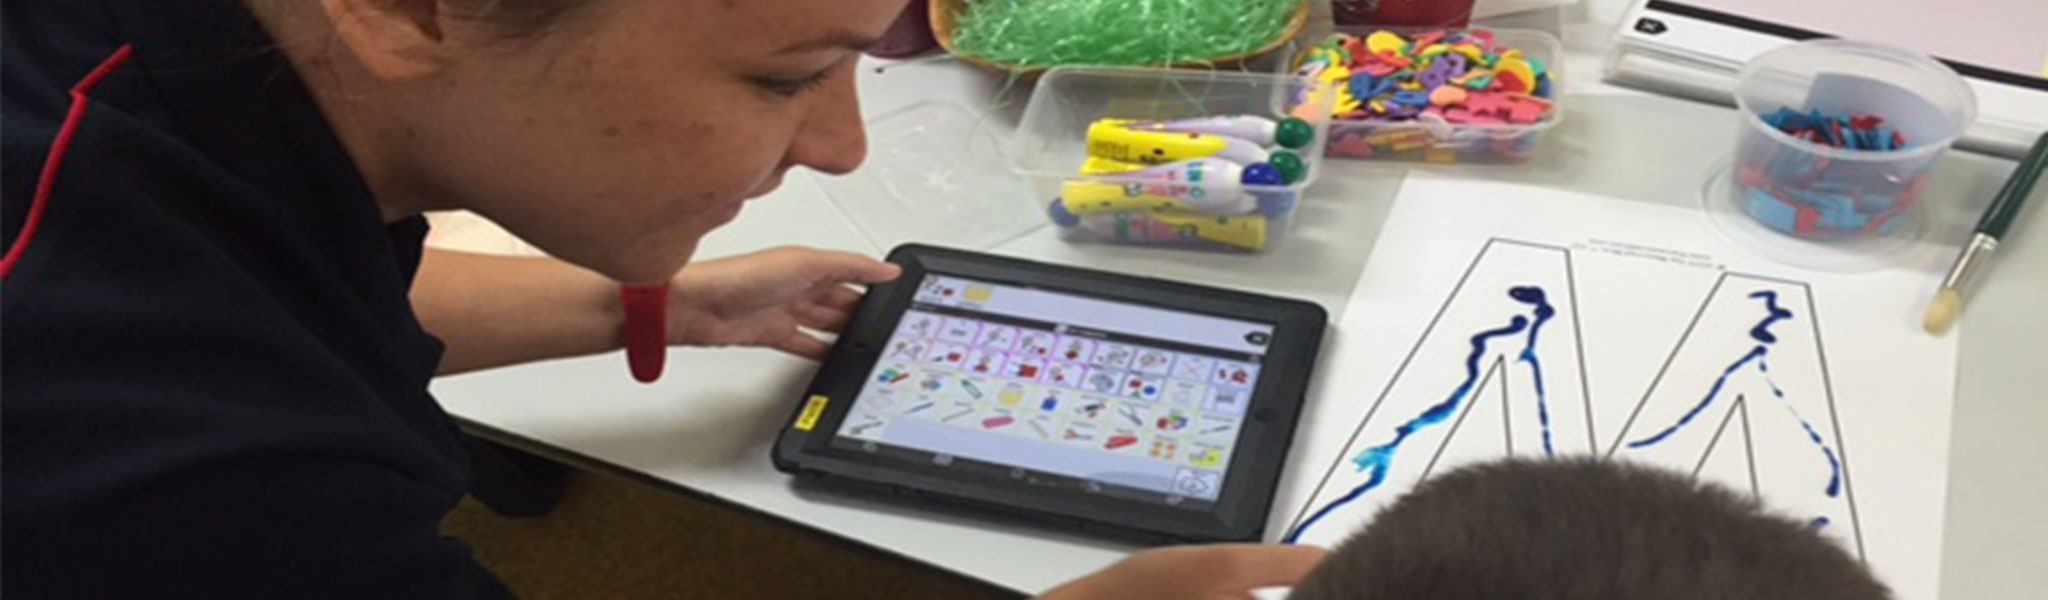 Student learning using digital tablet